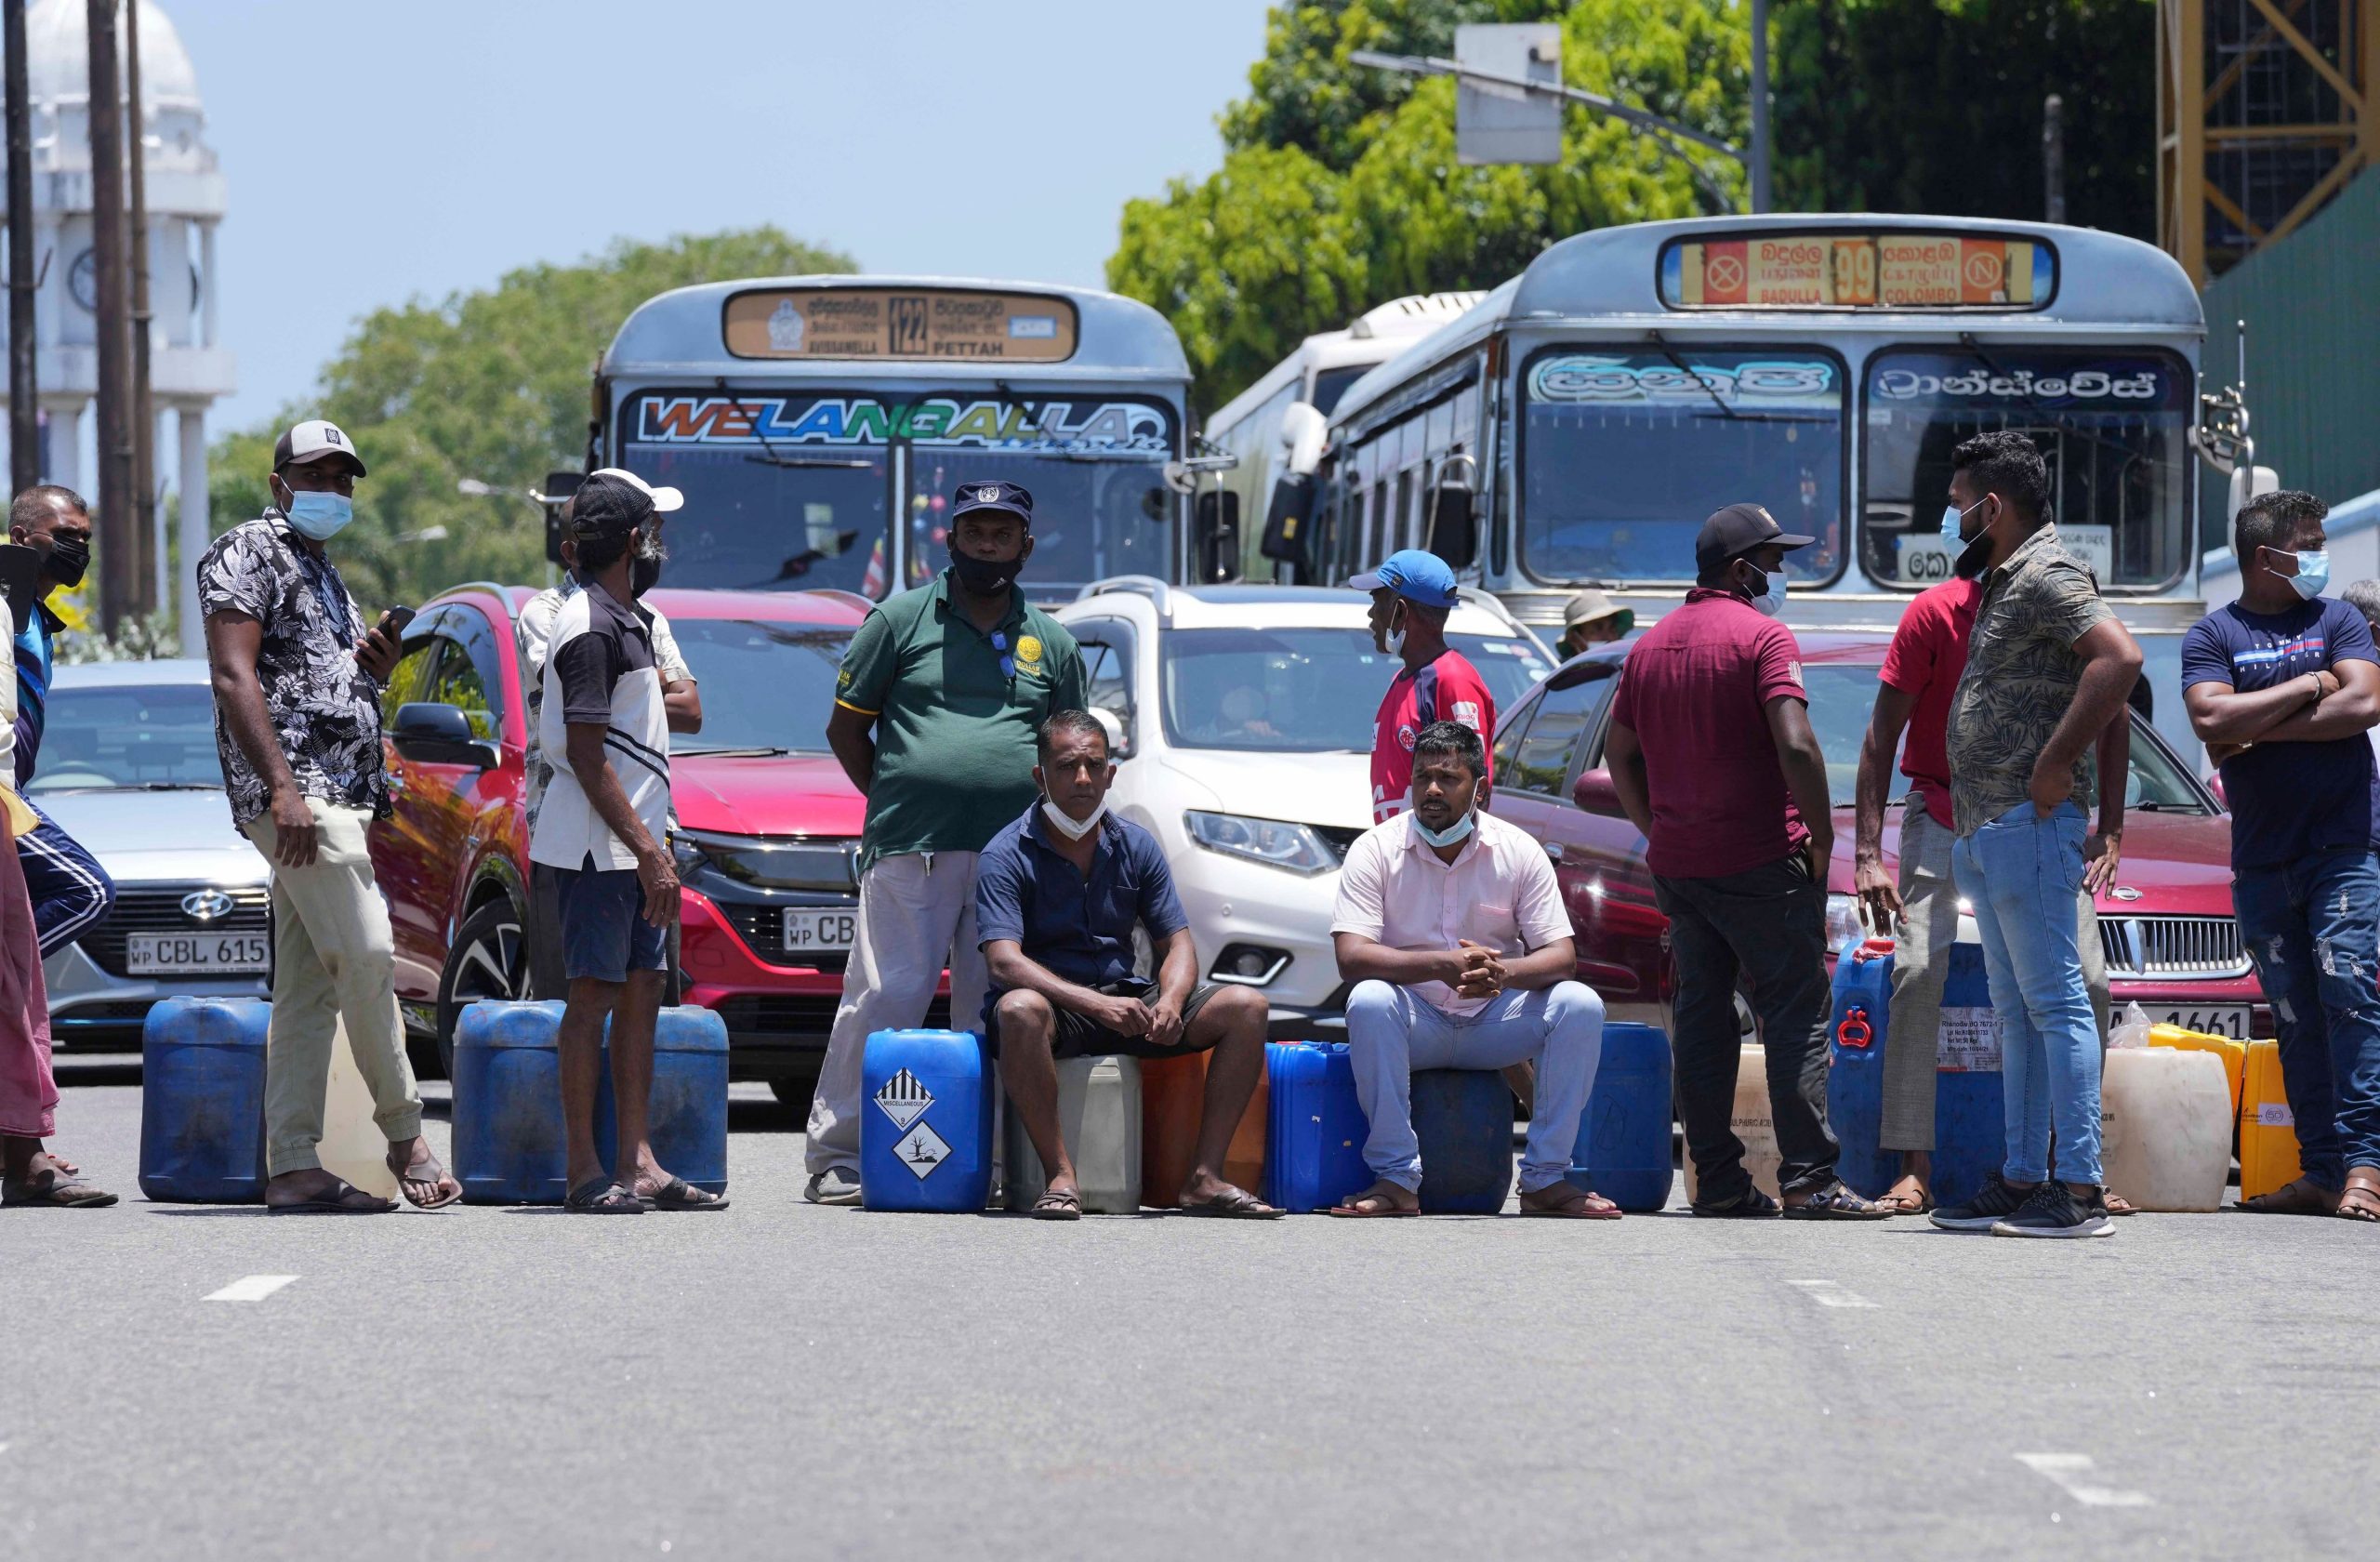 Sri Lanka economic crisis: Hundreds stage protest outside President’s home, check details